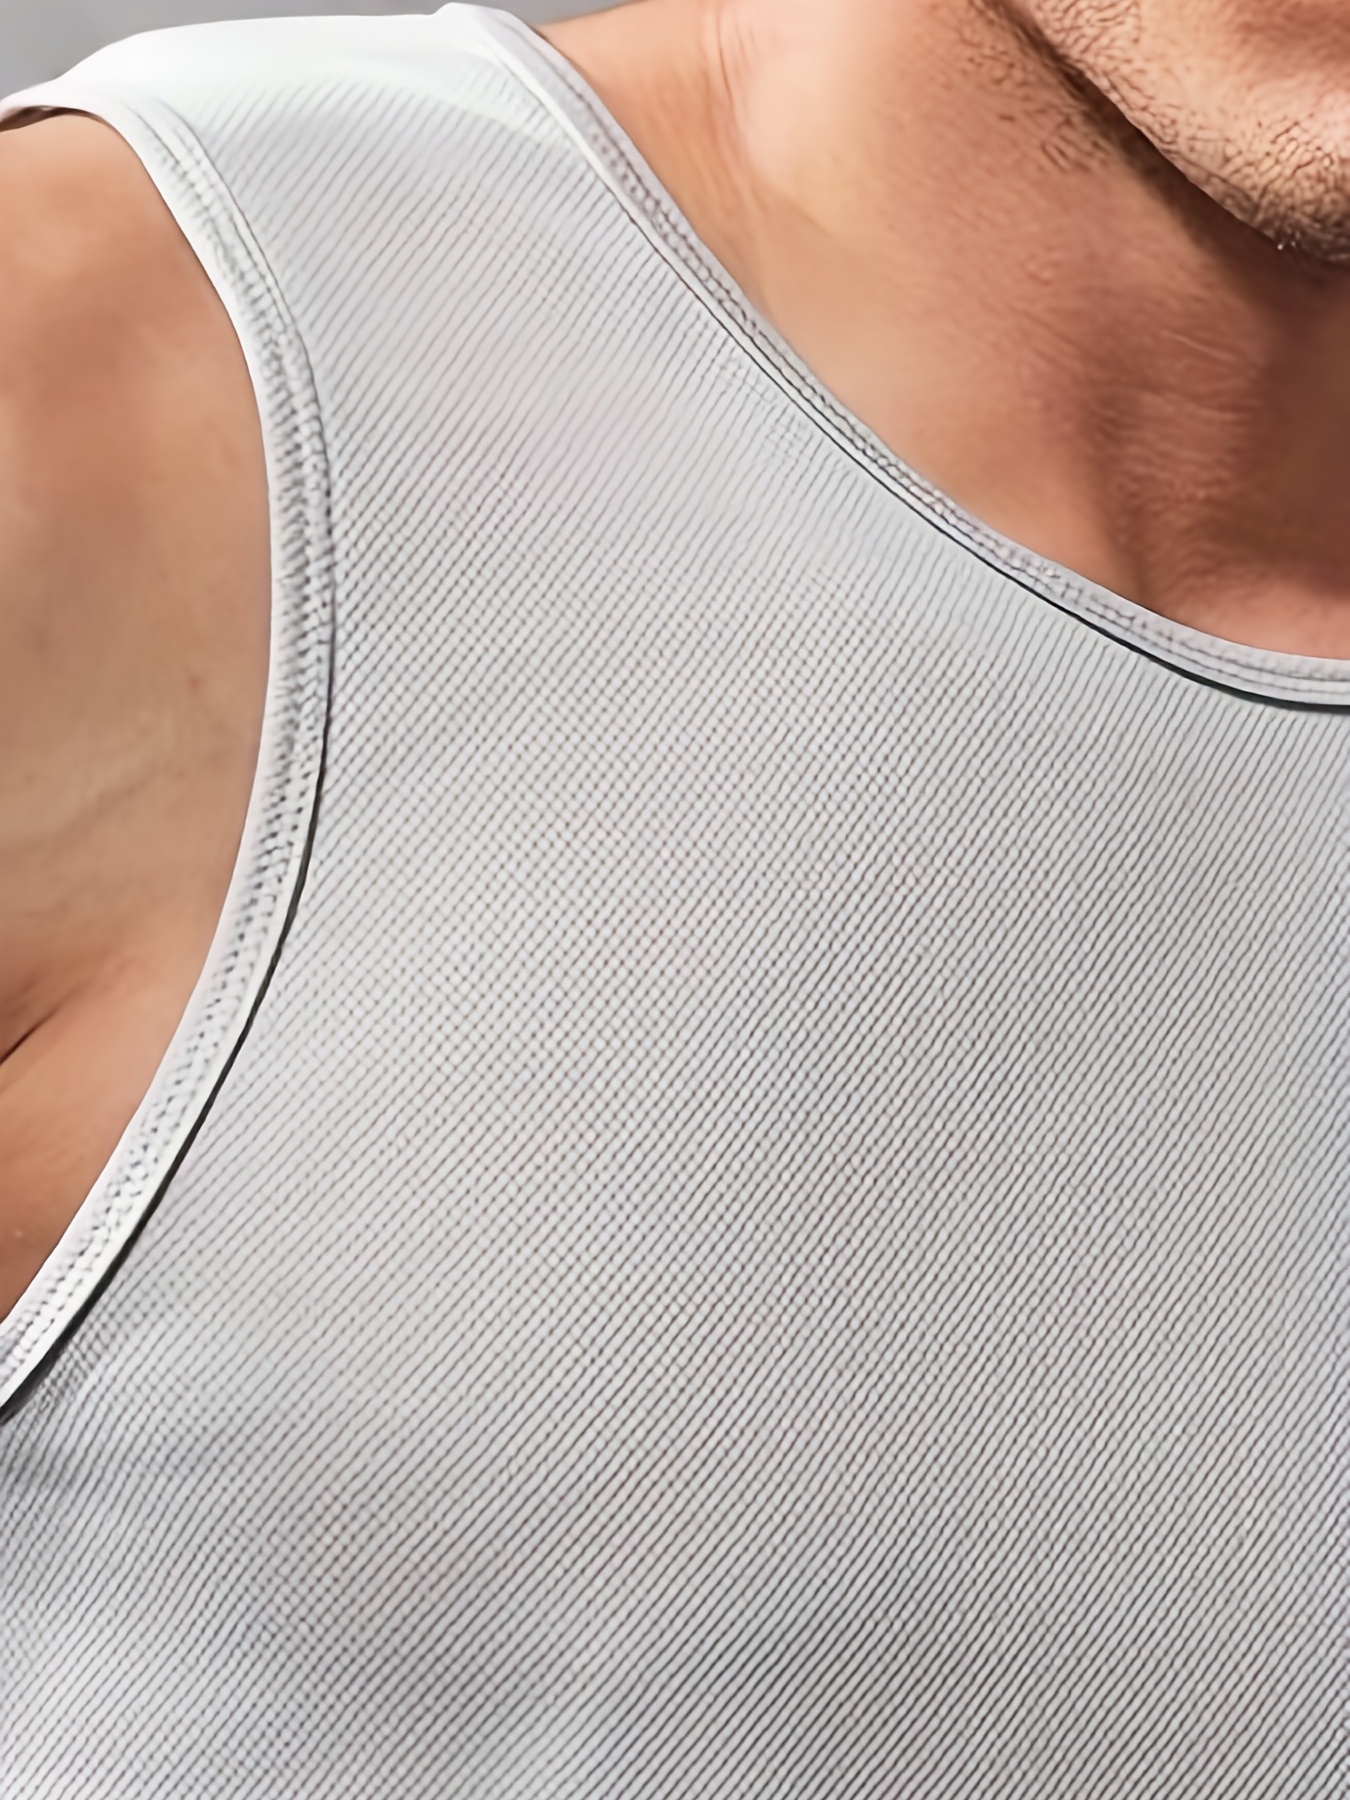 Camiseta gym hombre blanca sin mangas